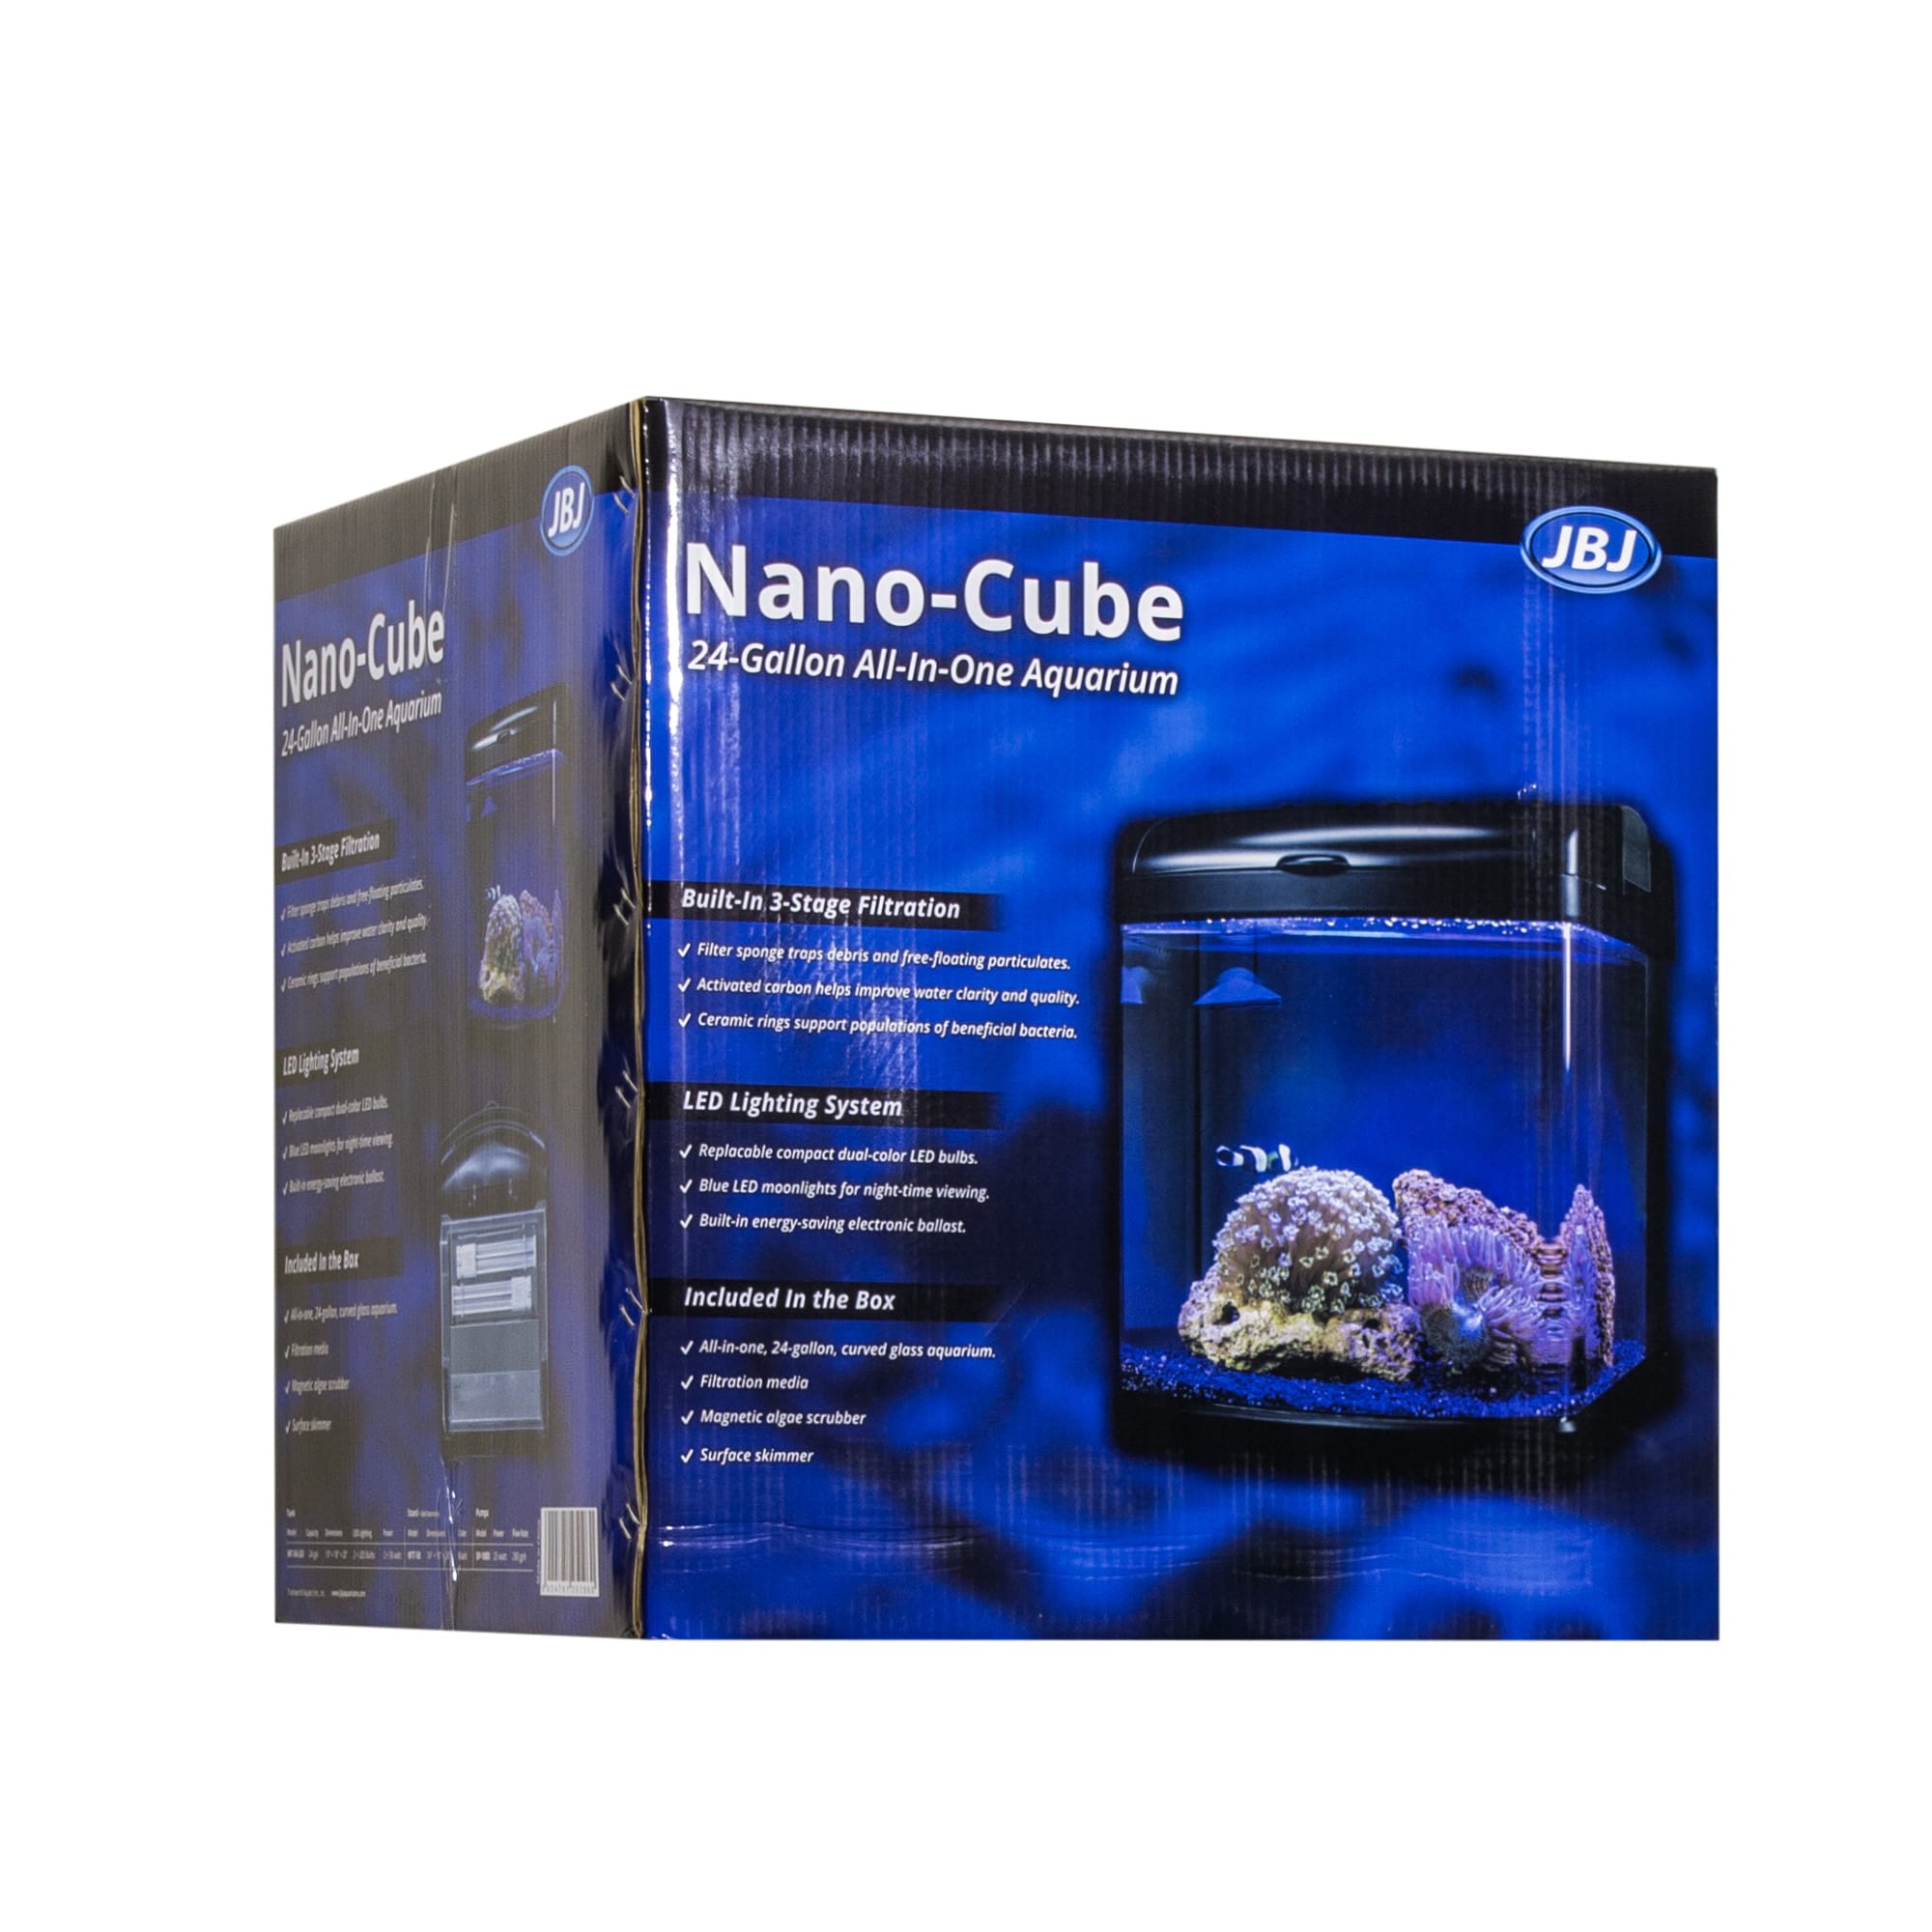 Herhaald Berouw vrijdag JBJ Nano-Cube All in One Tank, 24 Gallon | Petco